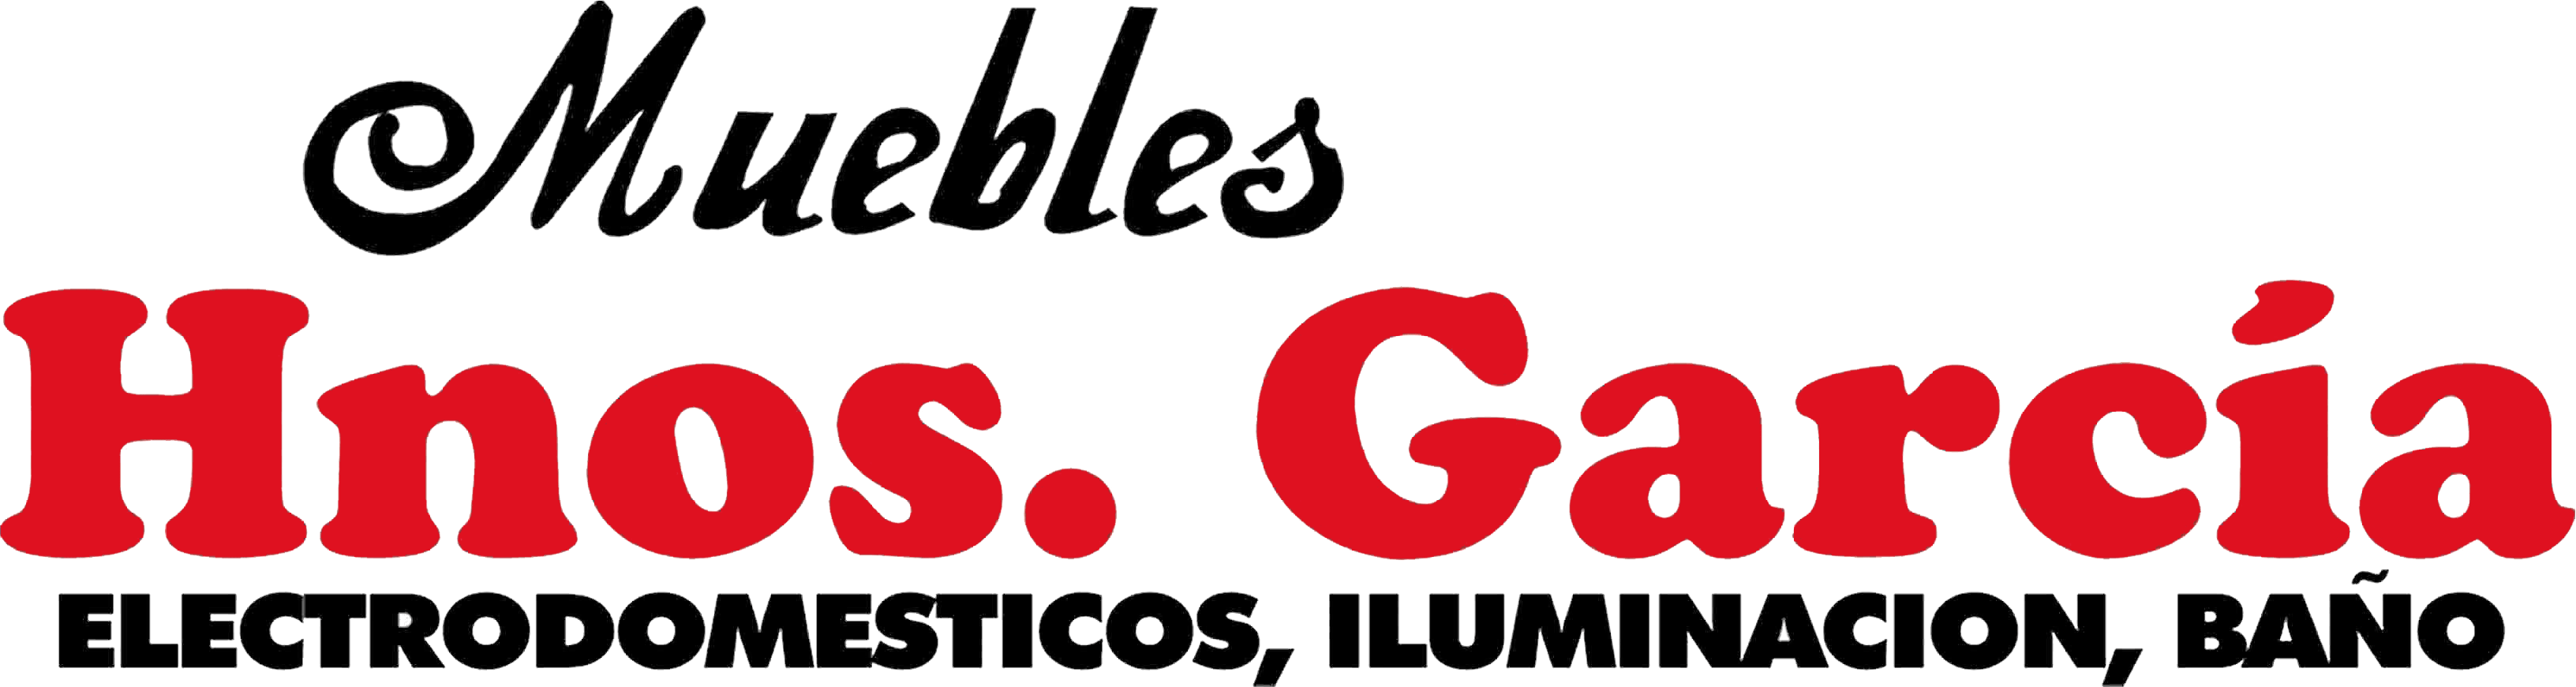 maleta Sentido táctil Hospitalidad Muebles Hnos. Garcia | 4 tiendas en Torrevieja | Mas de 14.000 mts